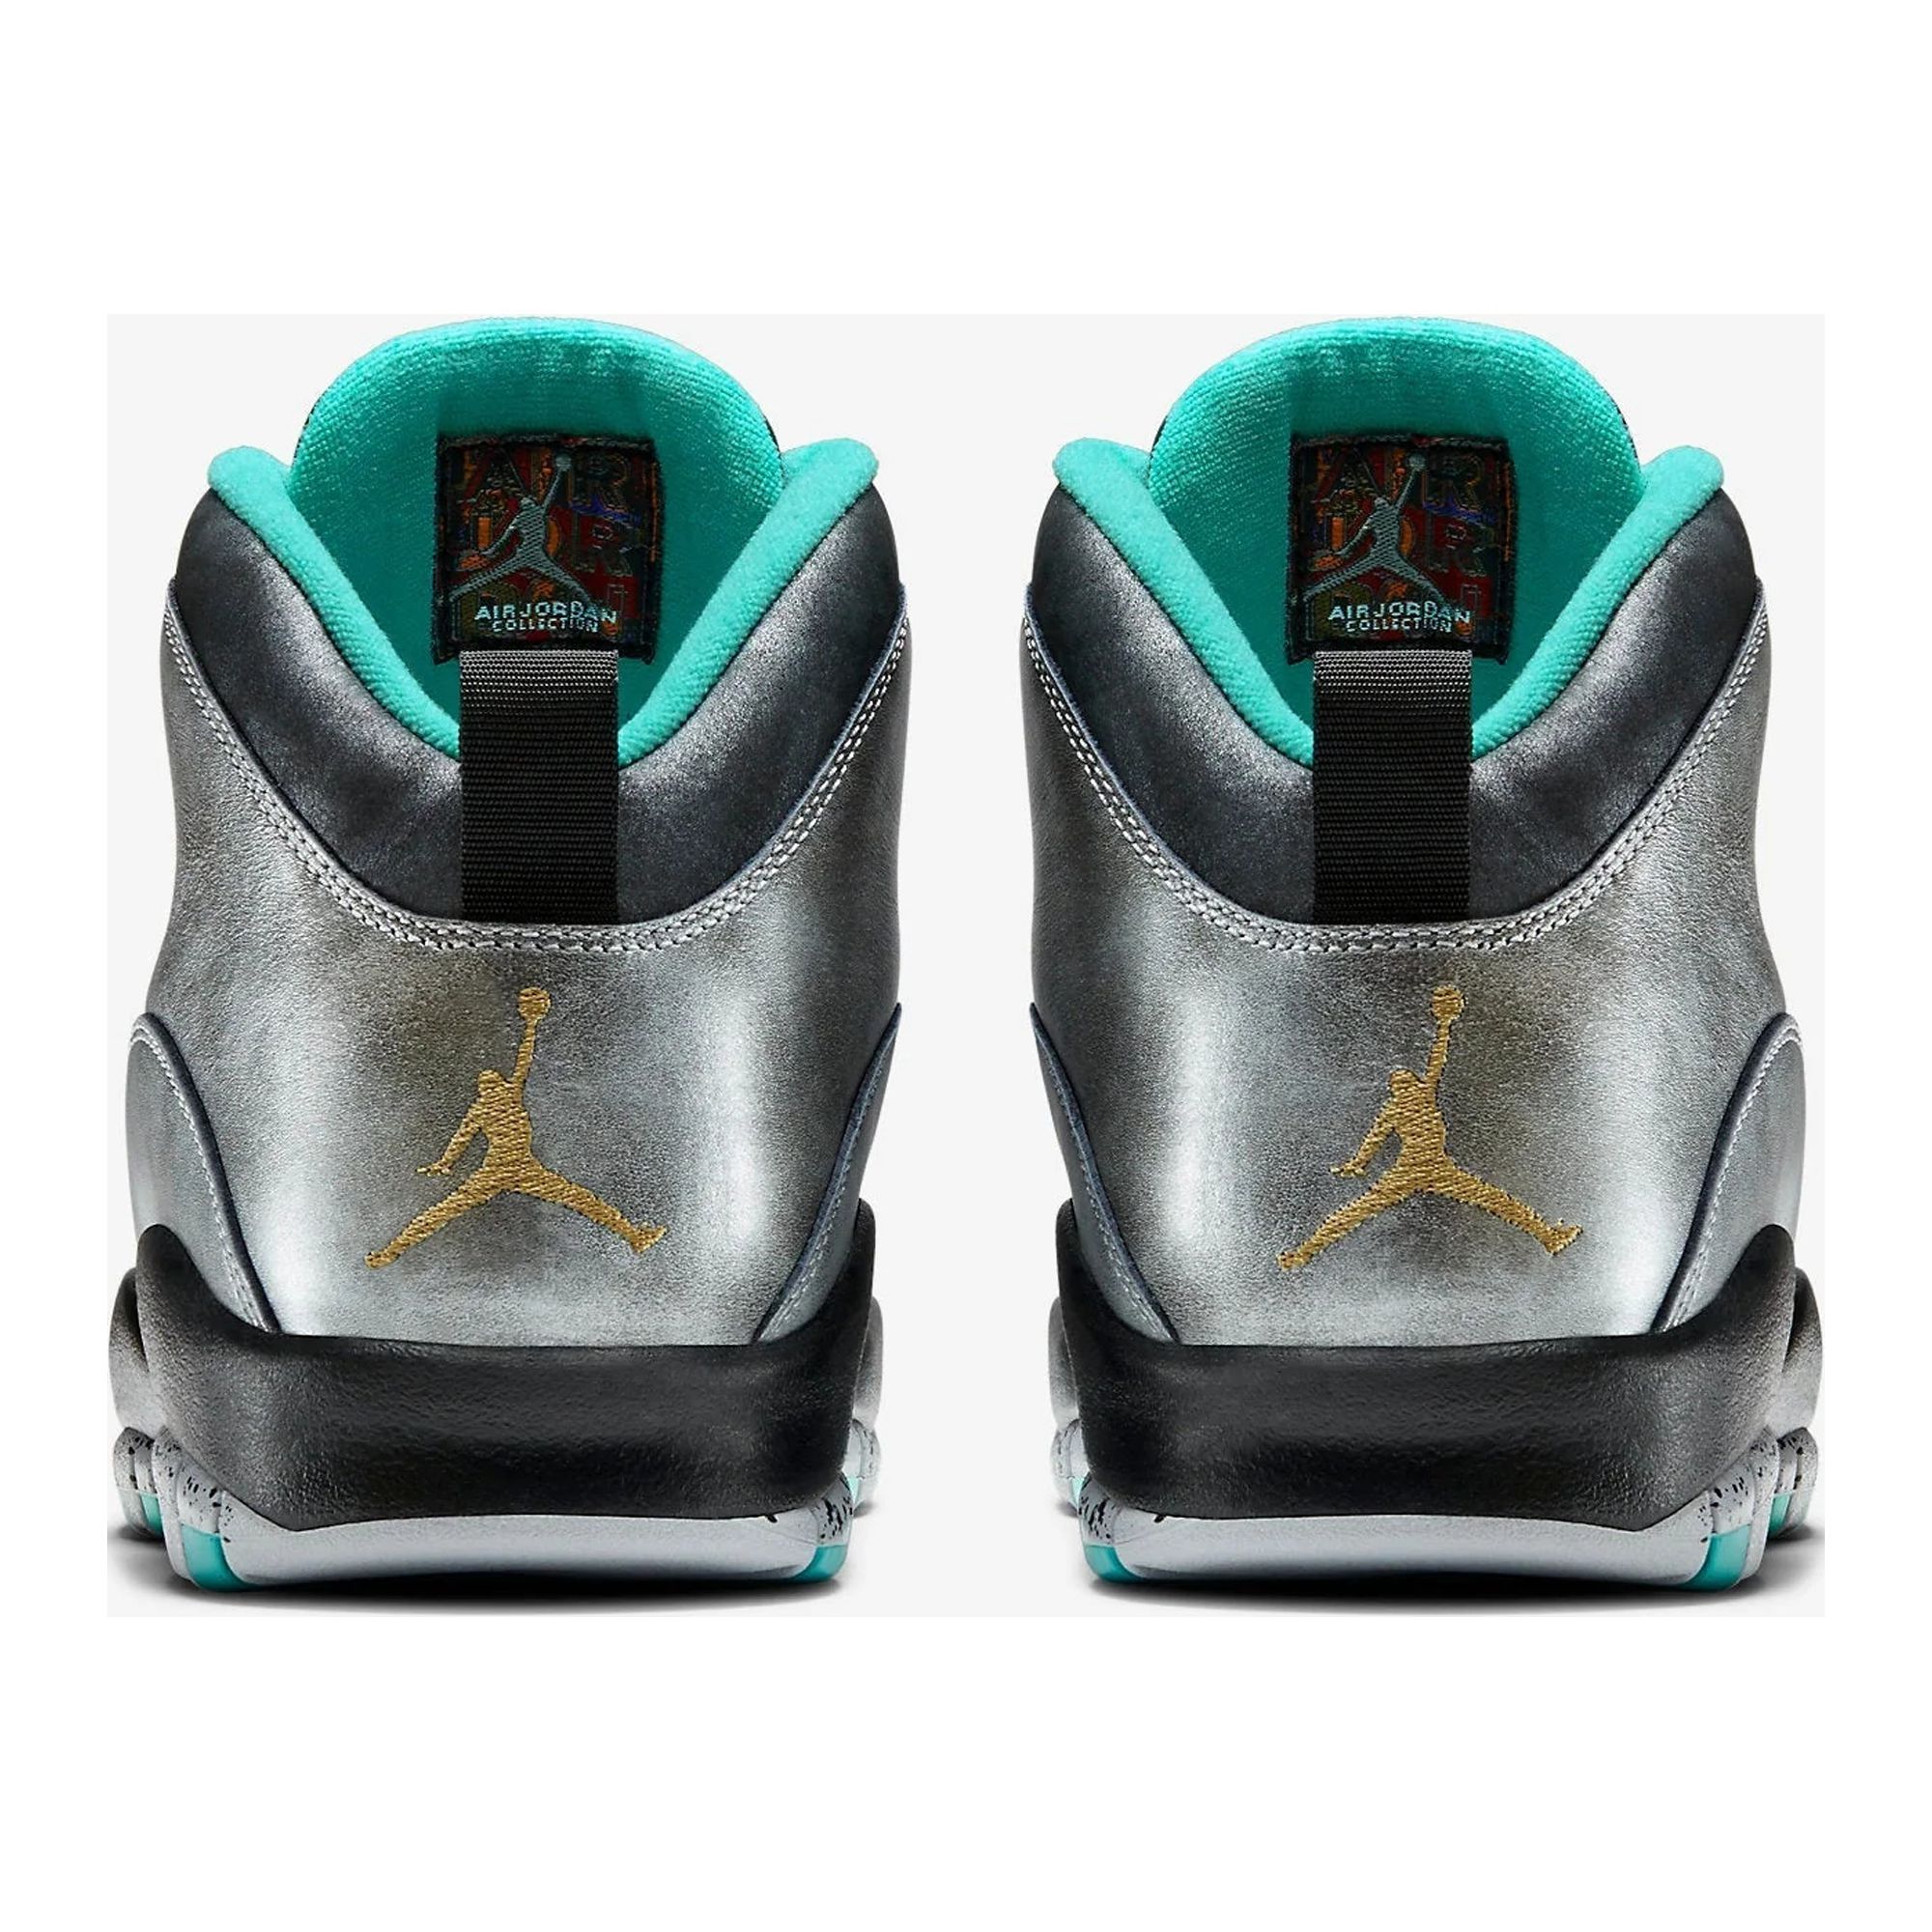 Nike Mens Air Jordan 10 Retro 30th "Lady Liberty" Dust/Metallic Gold 705178-045 - image 5 of 6